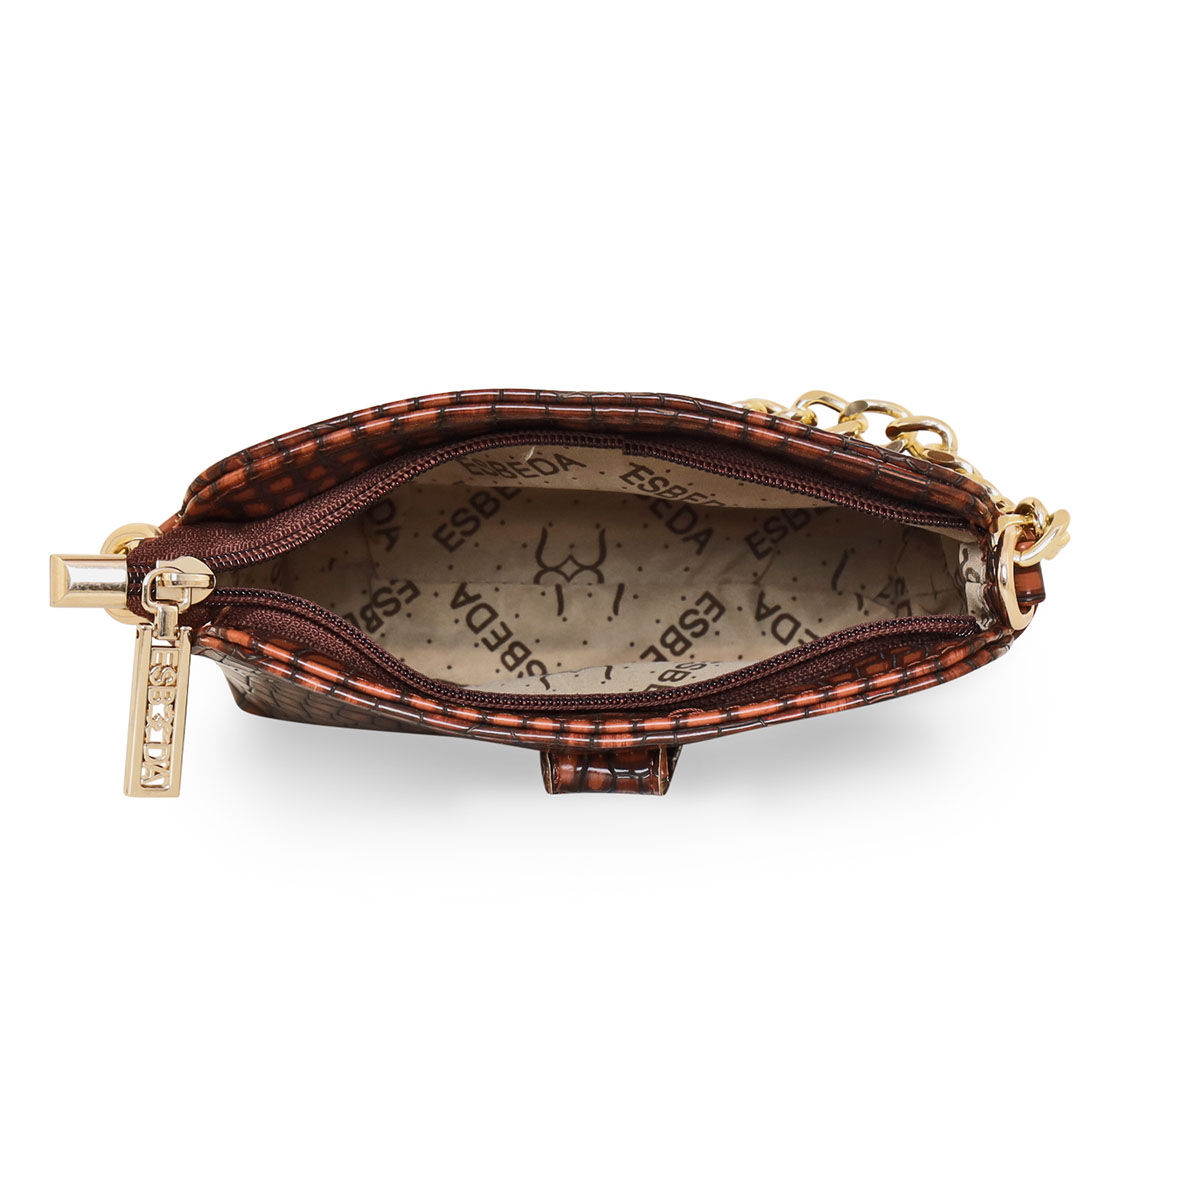 S-ZONE Handbag Purse Pebbled Leather Rust Brown 1679 | eBay